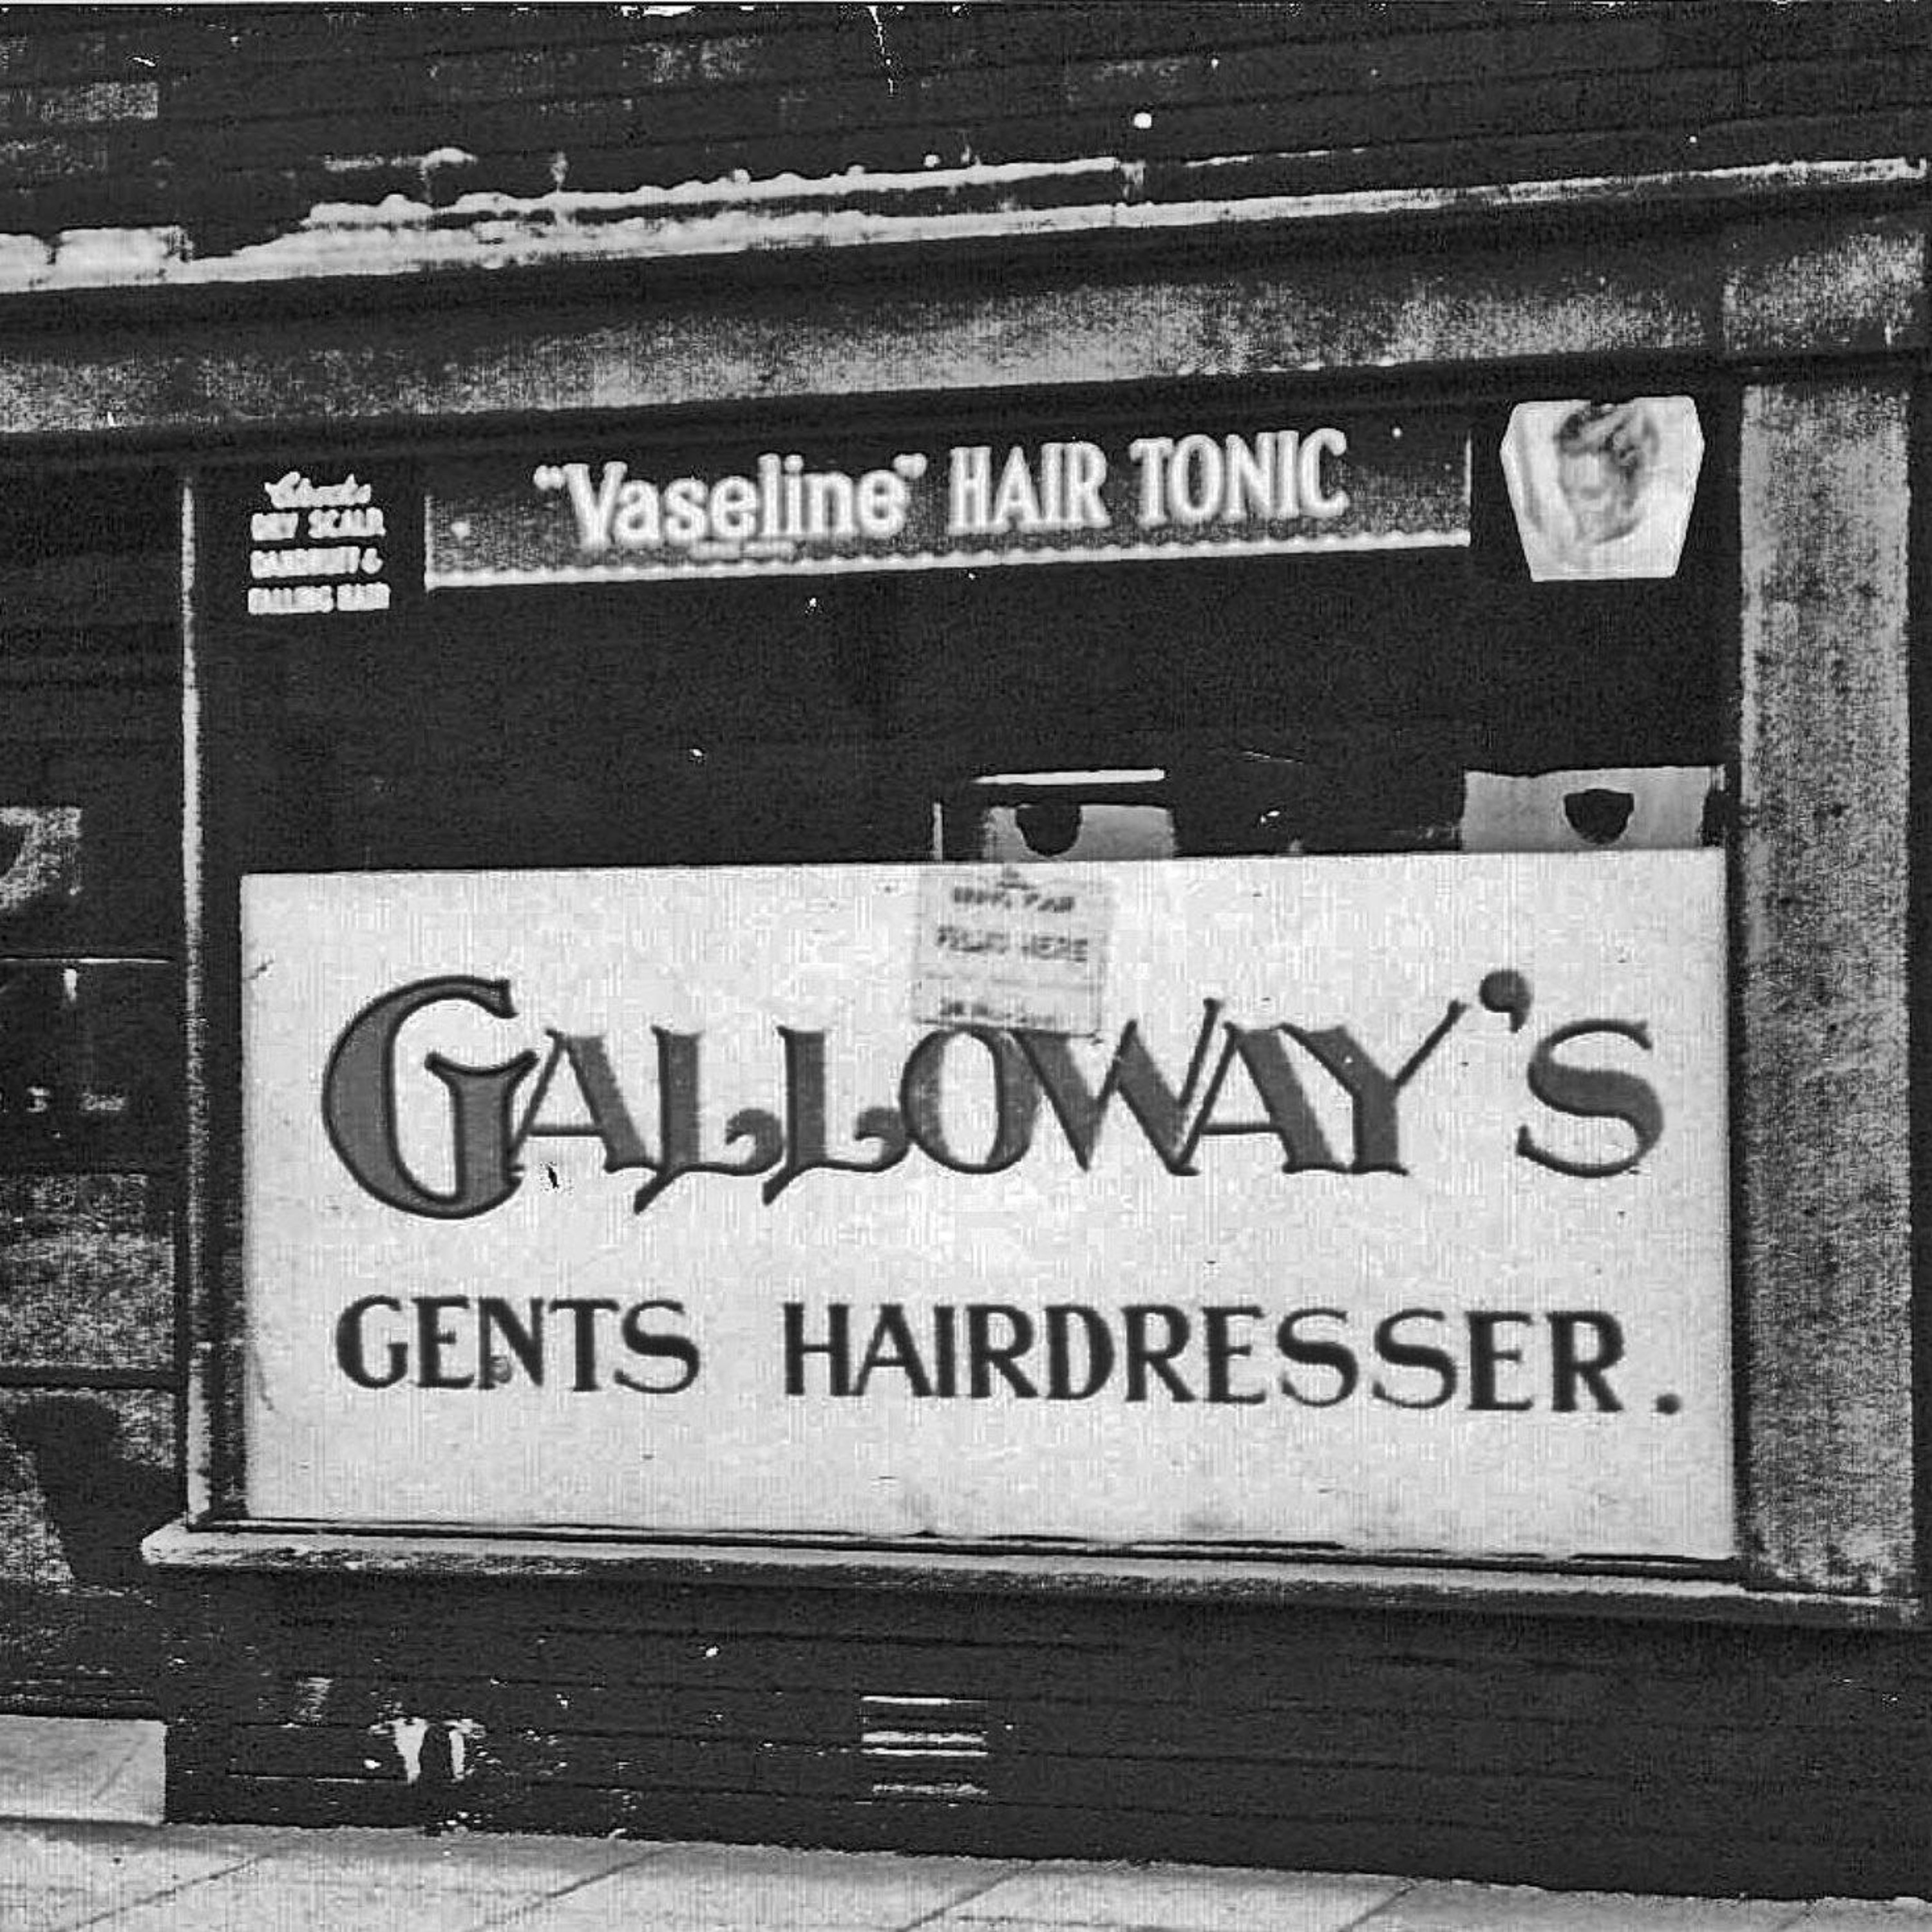 Program 06:  Galloway's the barbers